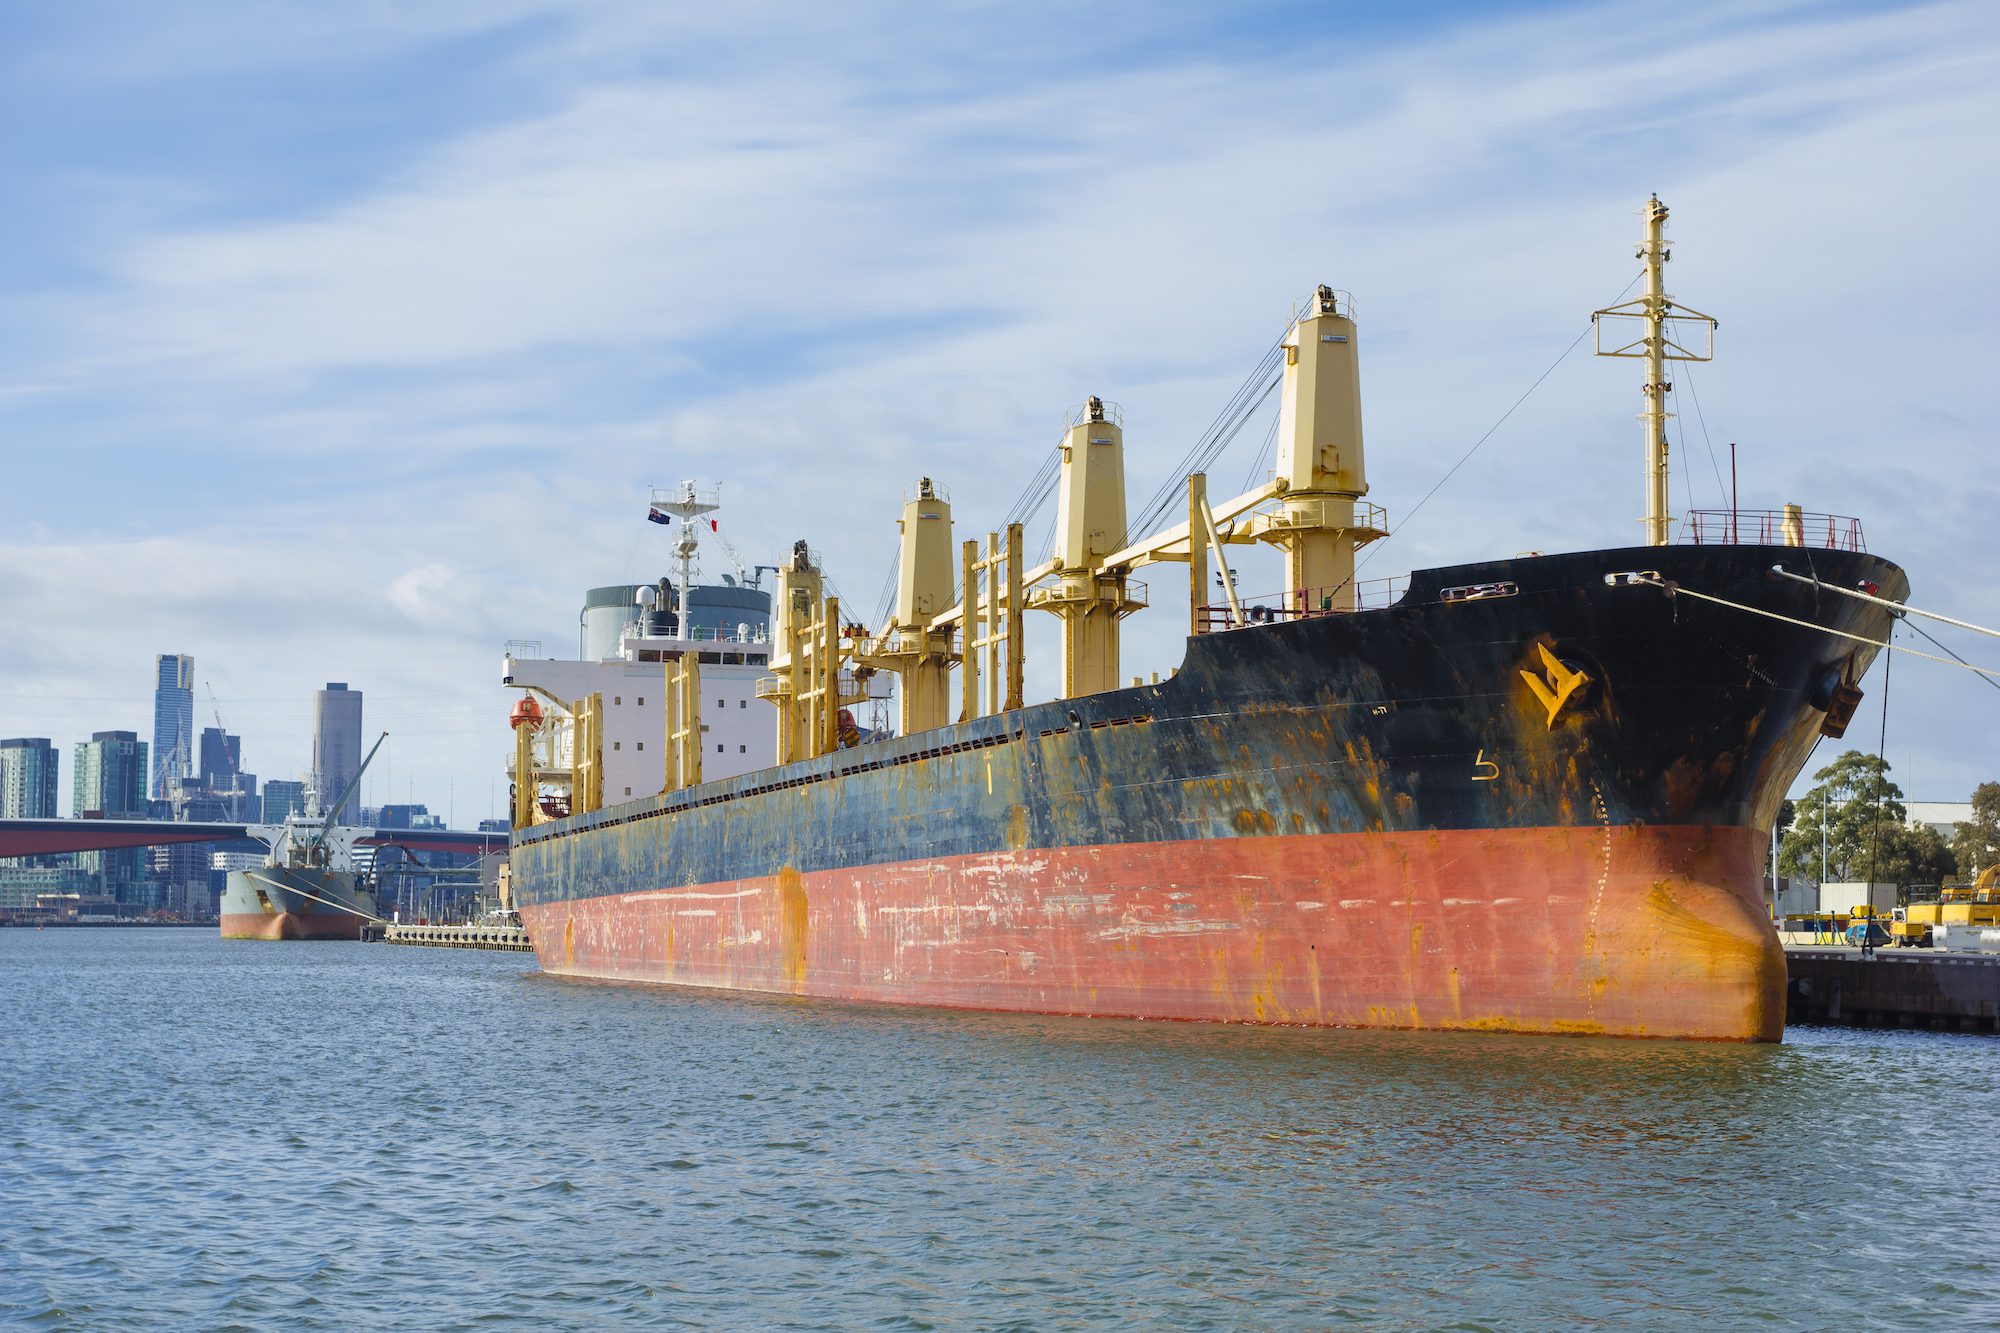 A large bulk carrier at the Port of Melbourne, Australia